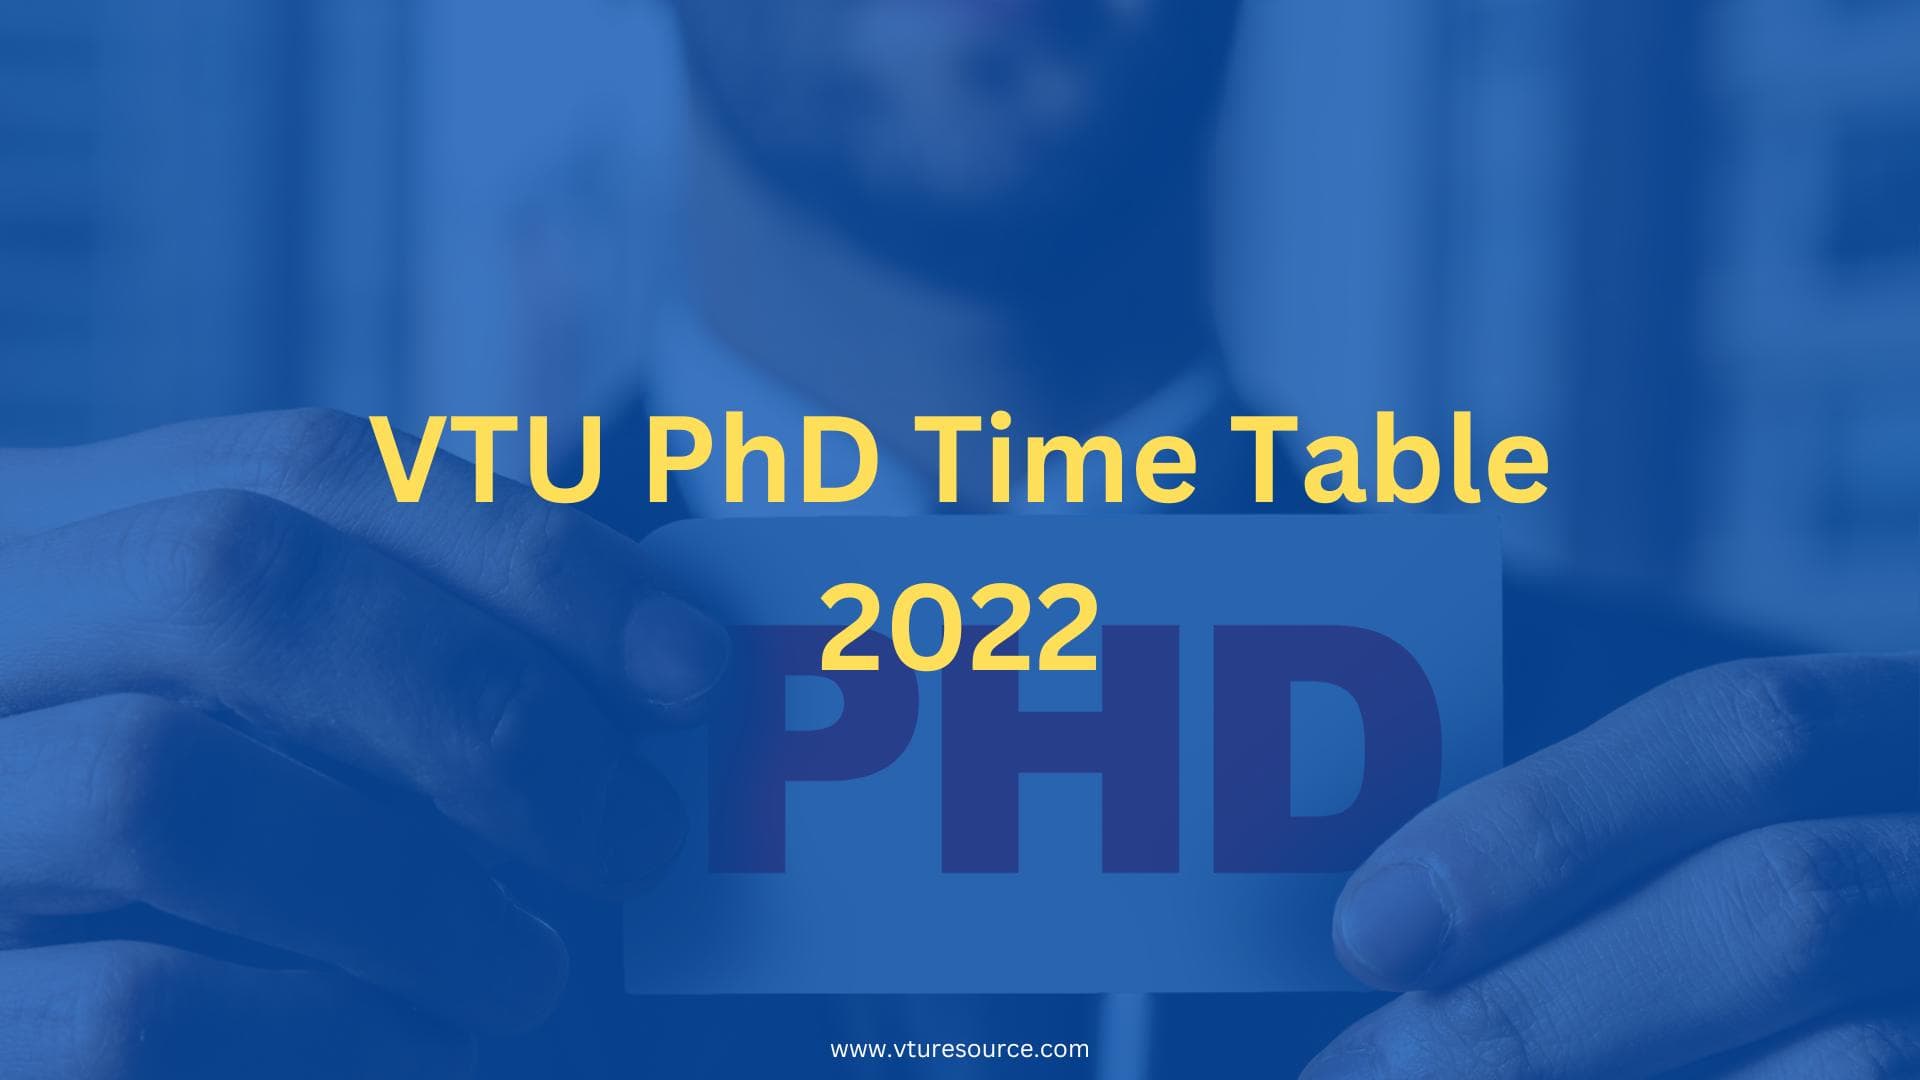 VTU PhD Time Table 2022